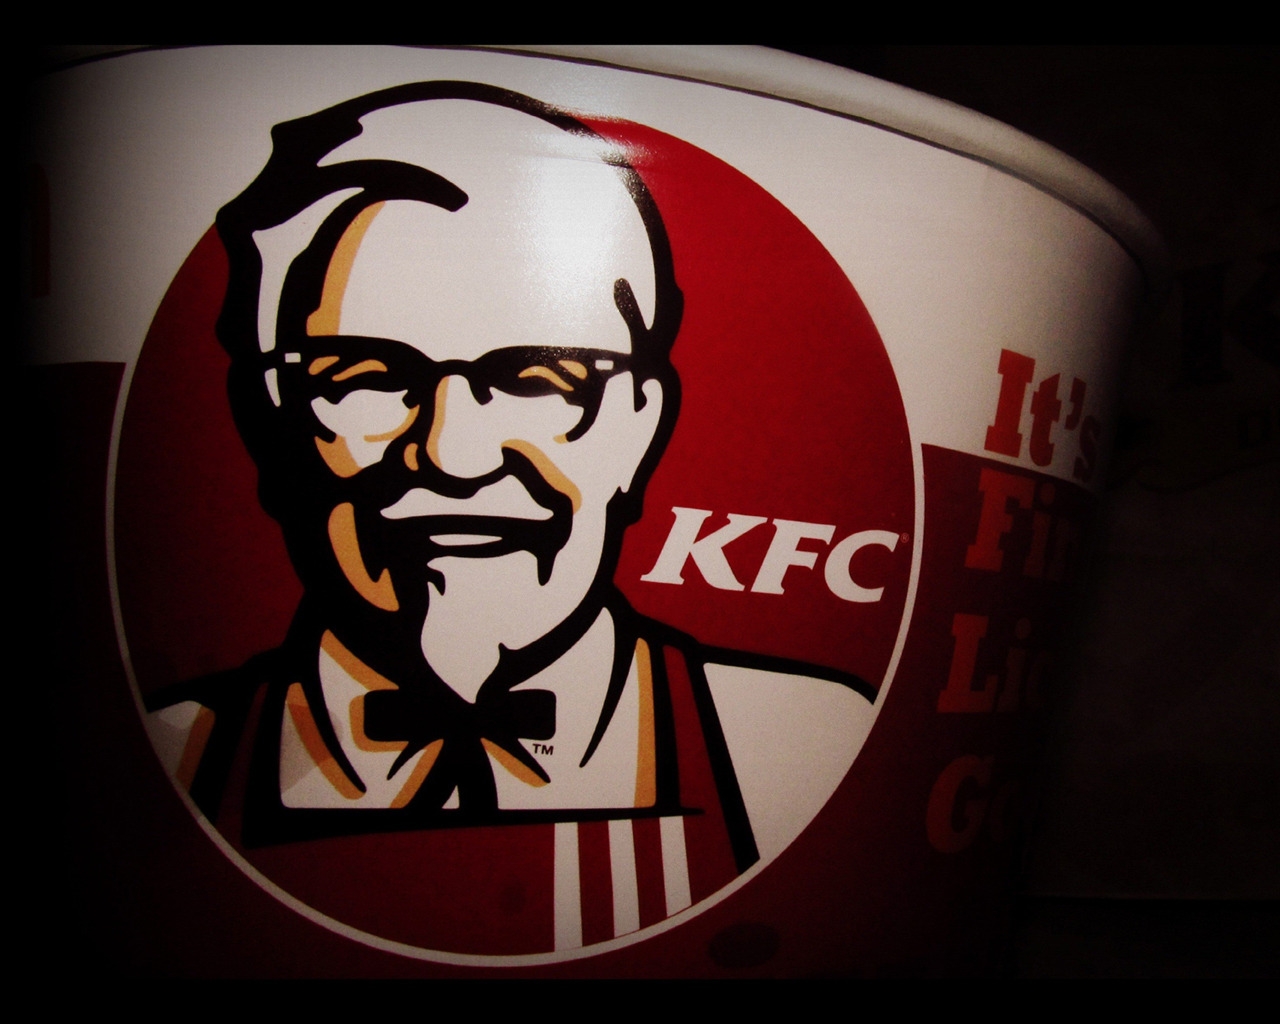 KFC for 1280 x 1024 resolution